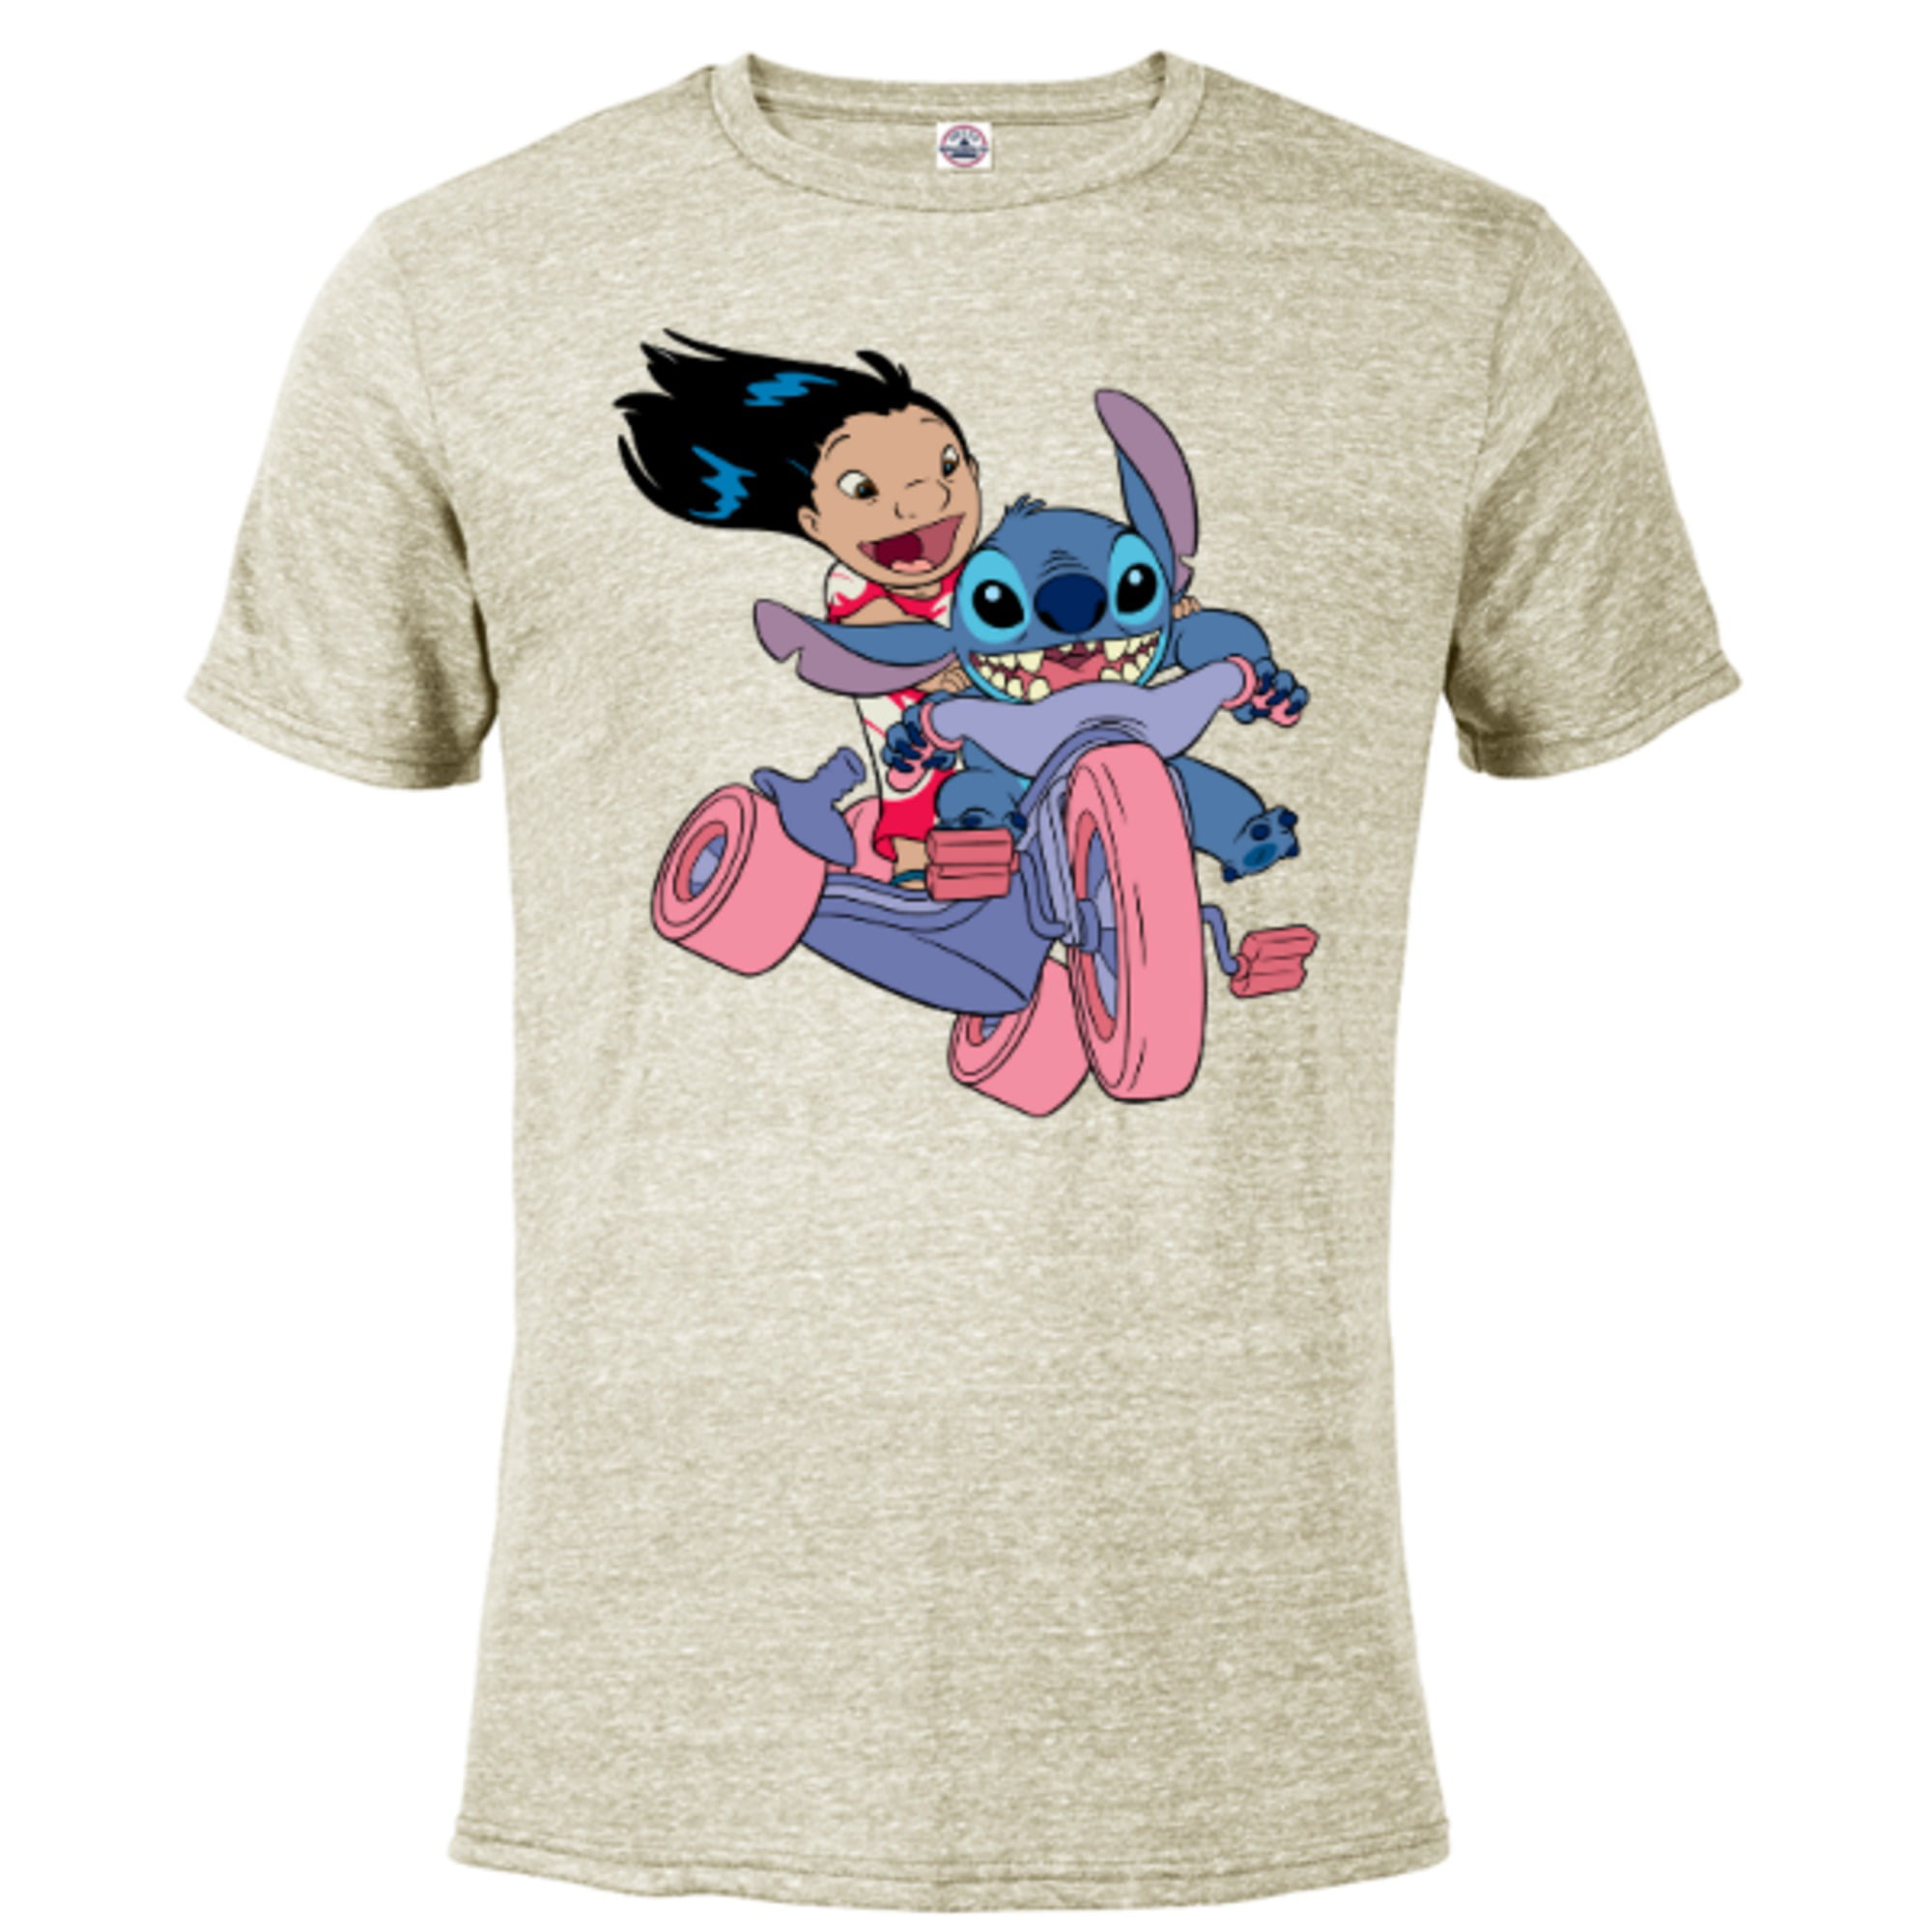 Disney Lilo & Stitch Book Buds unisex t-shirt — Out of Print